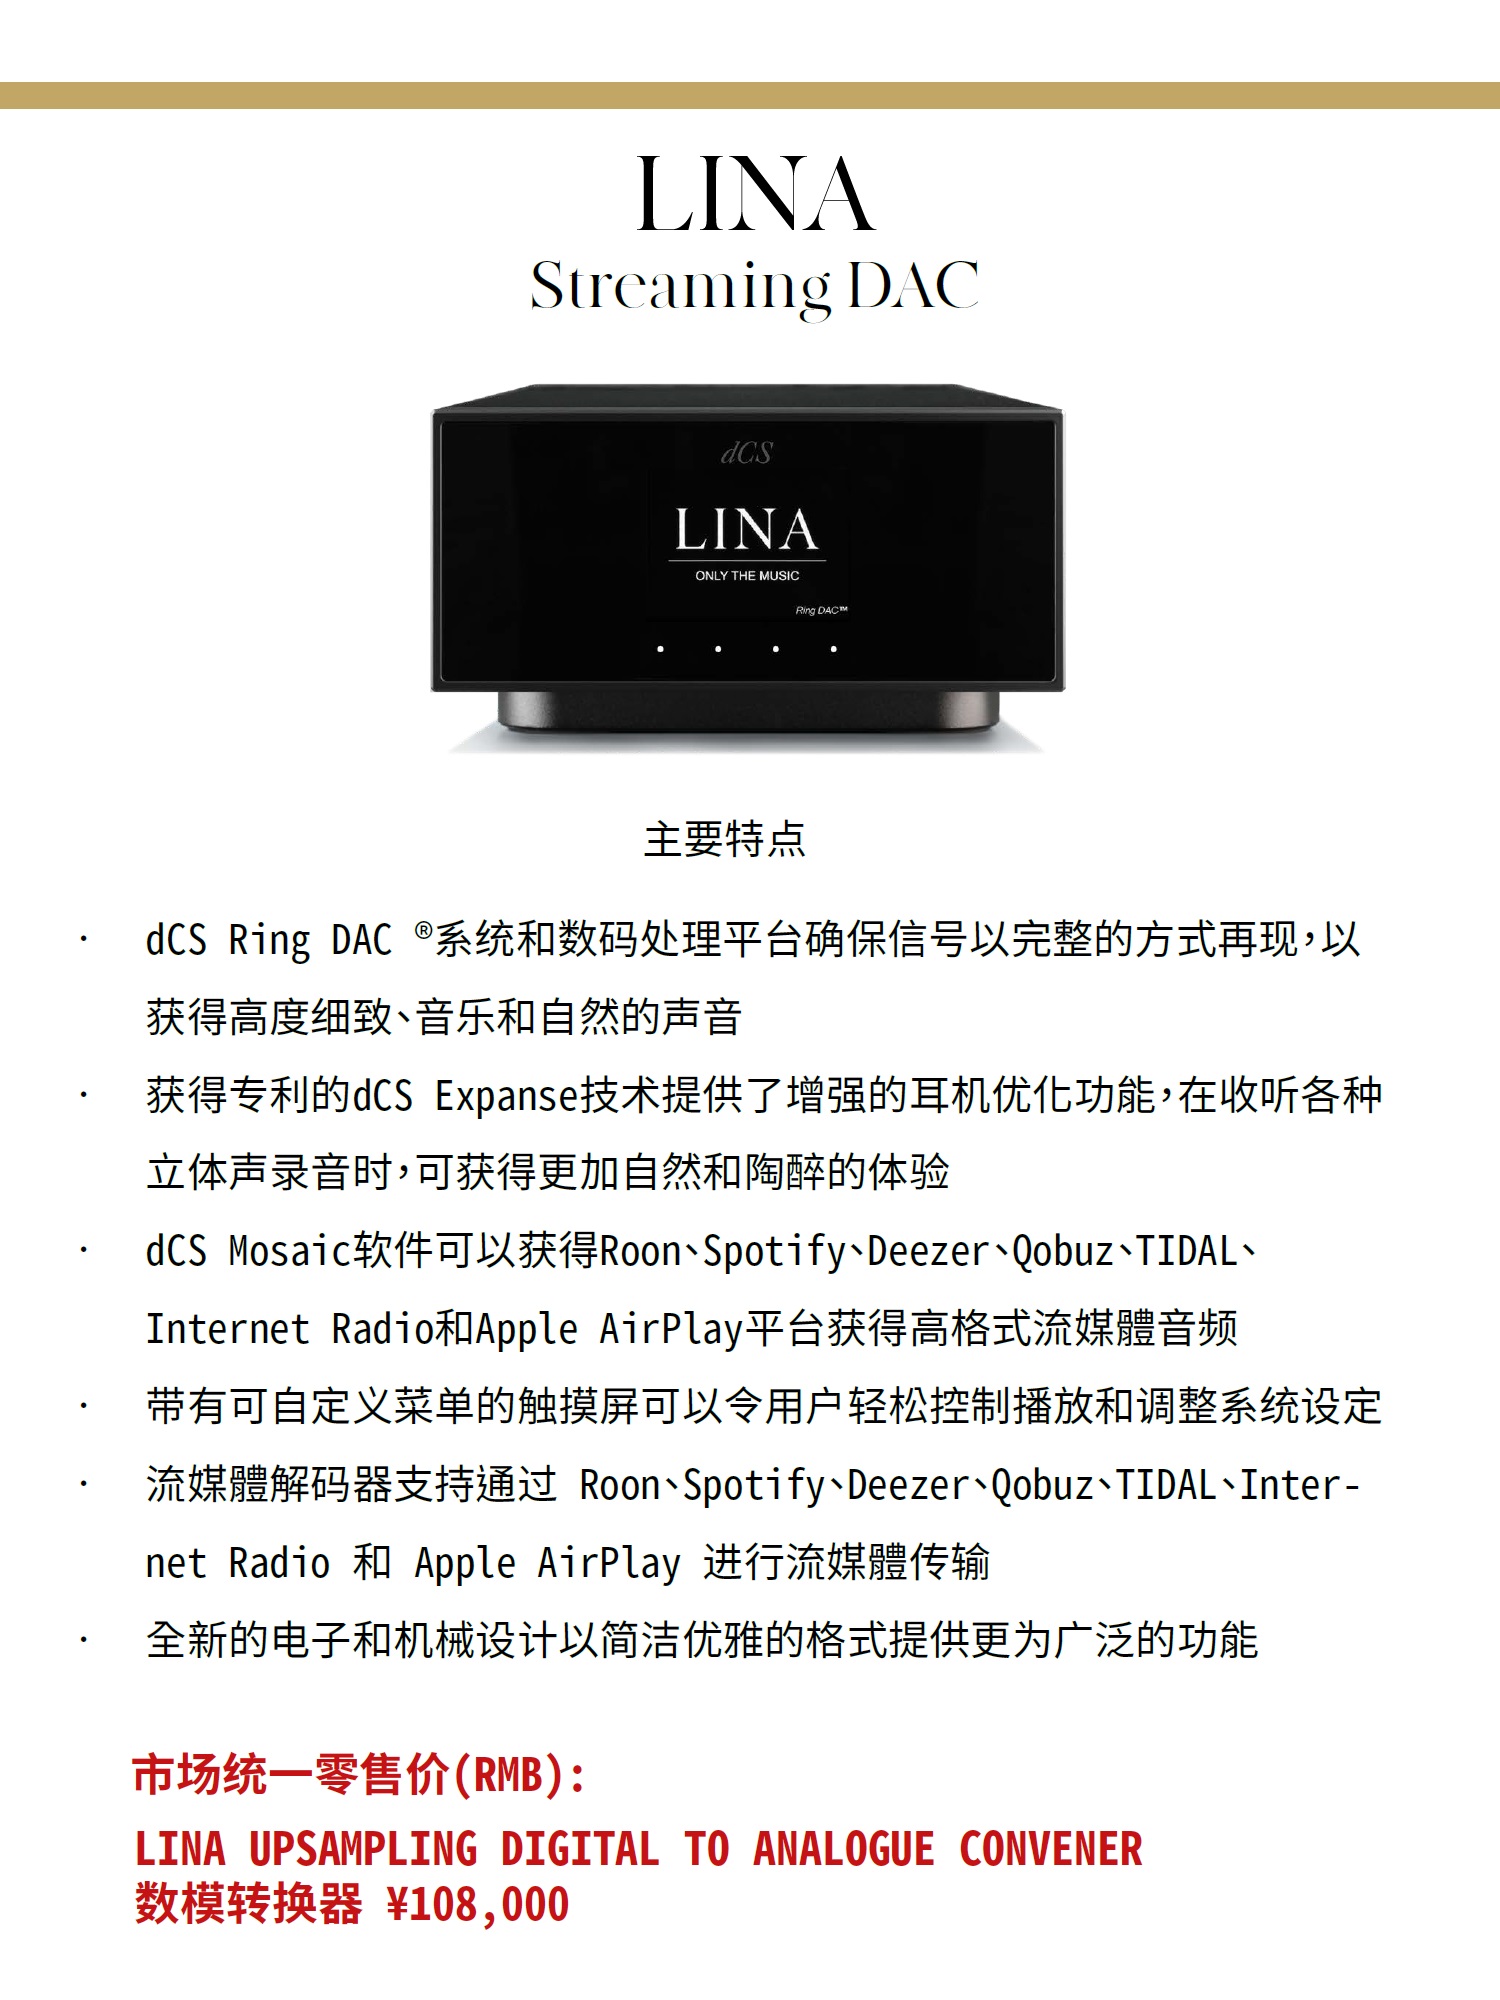 LINA Streaming DAC